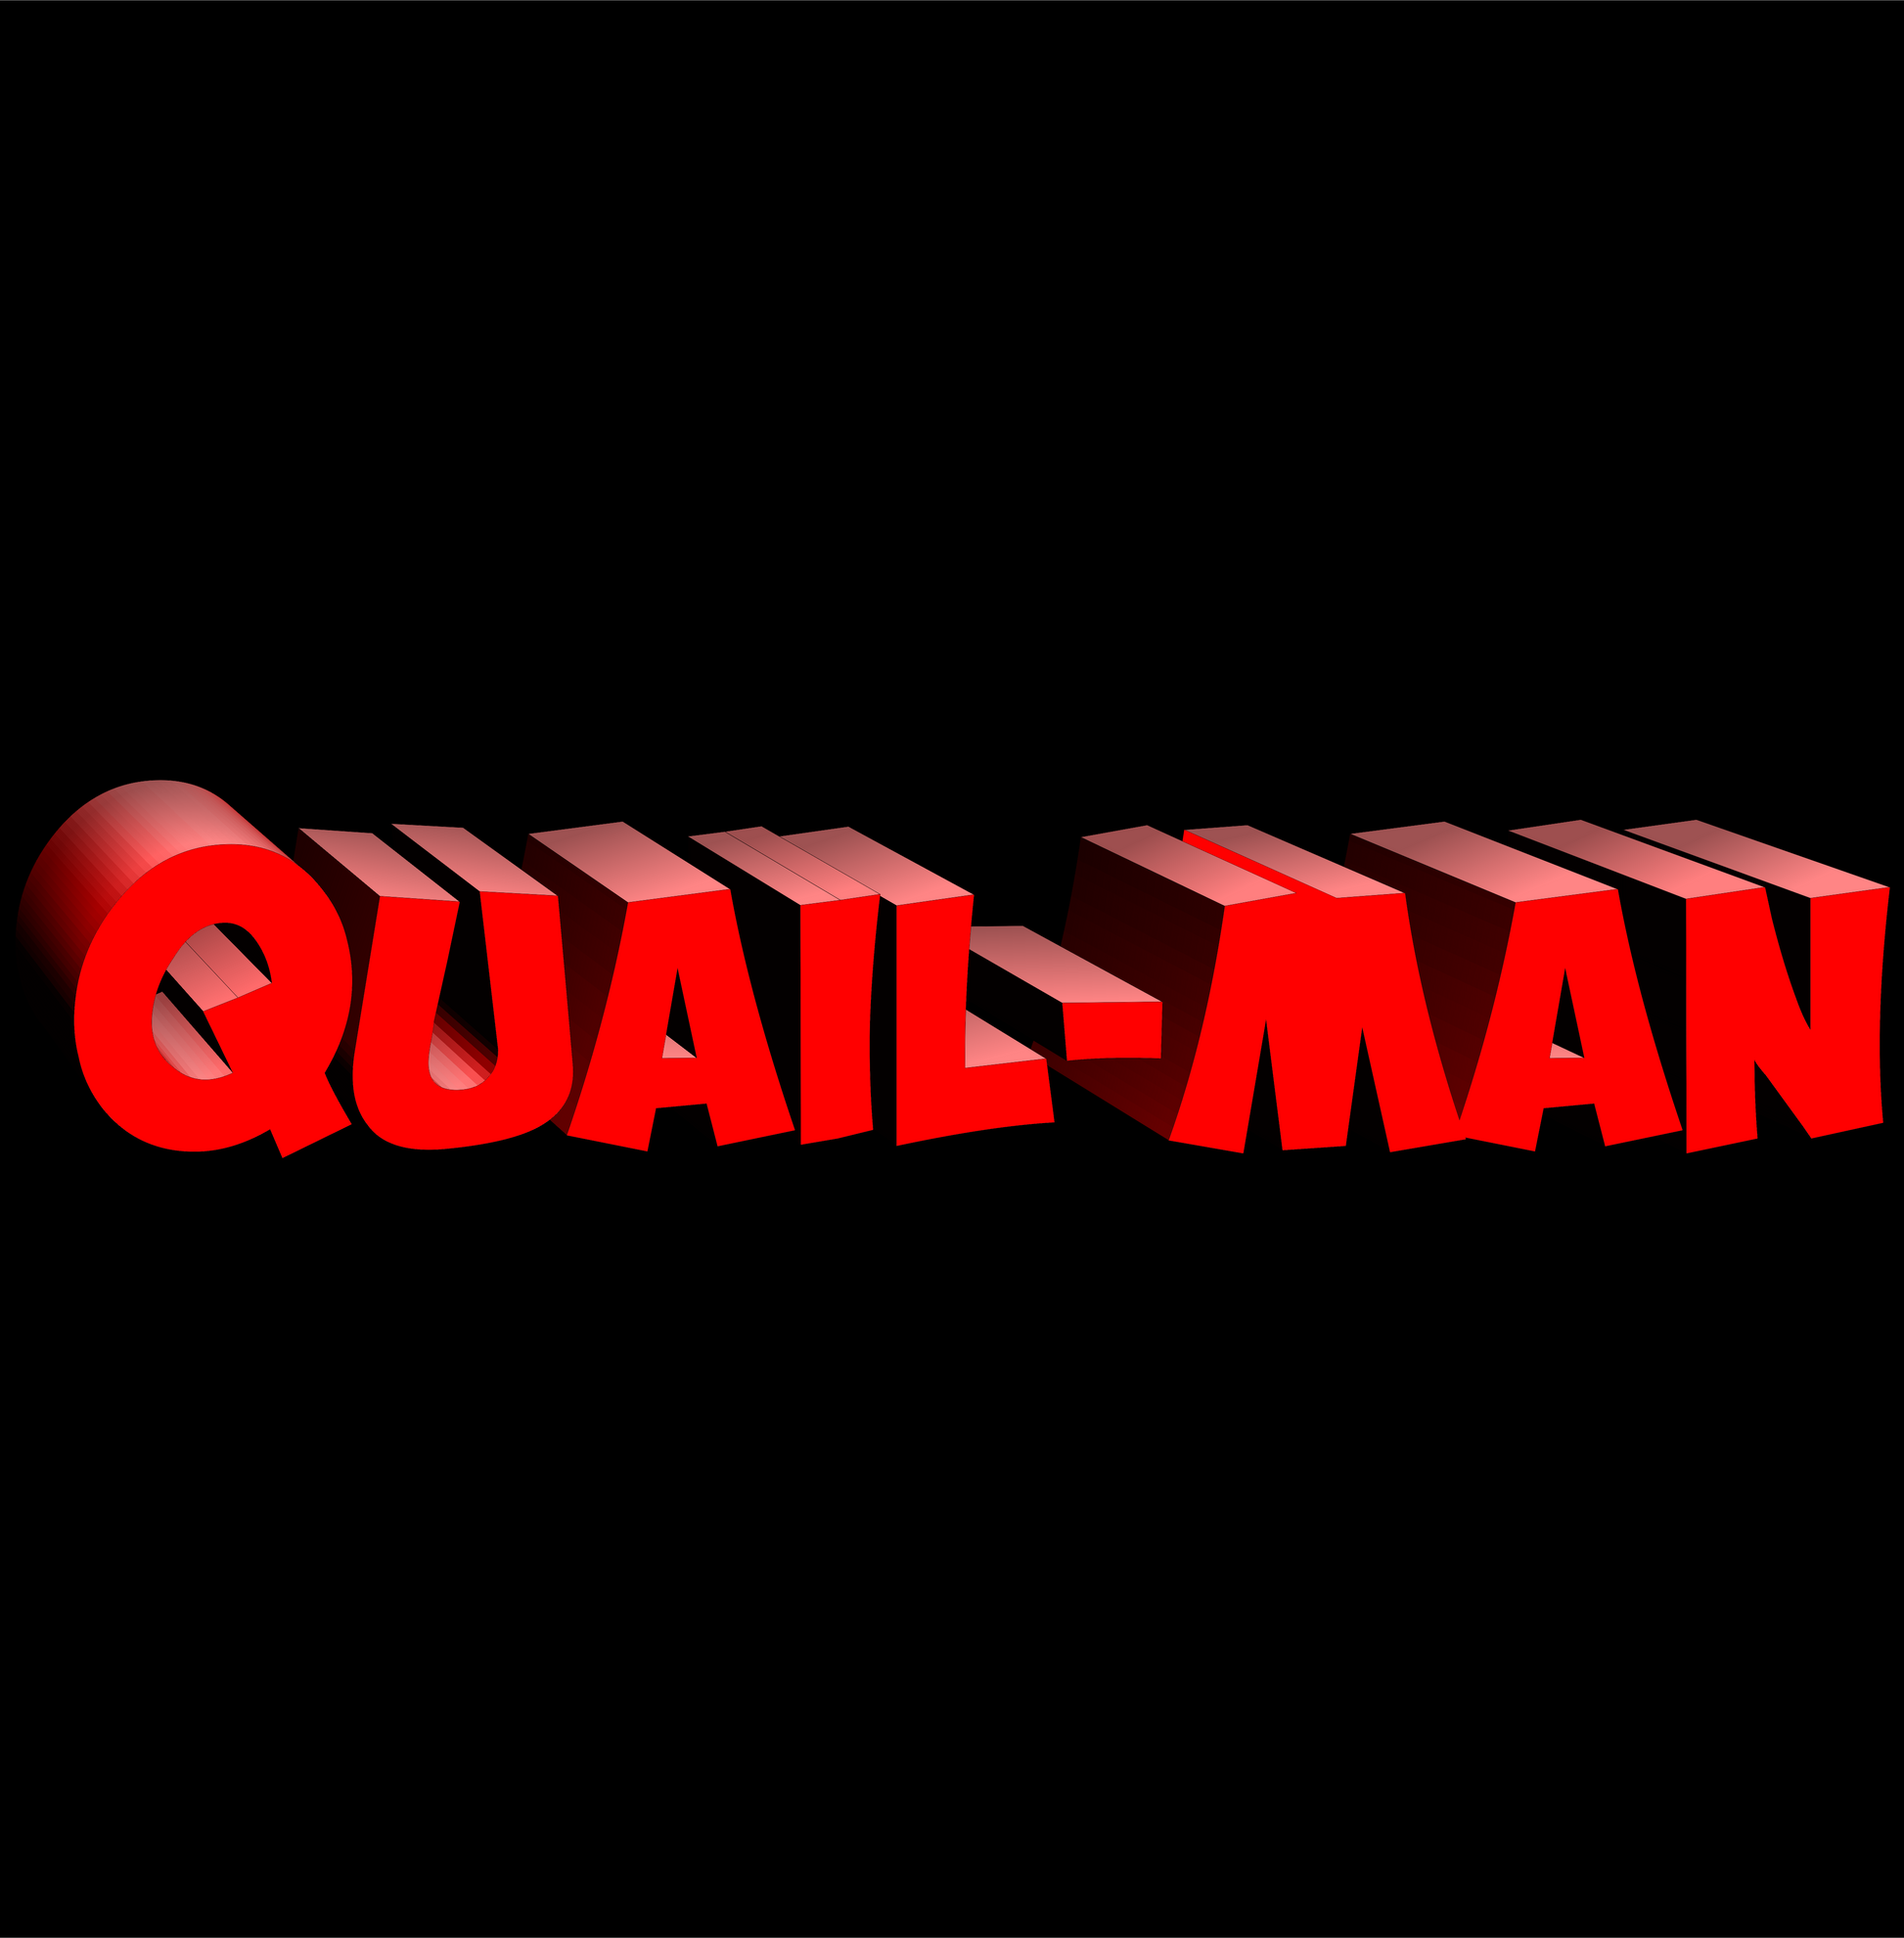 doug quail-man nickelodeon DTG design graphic back